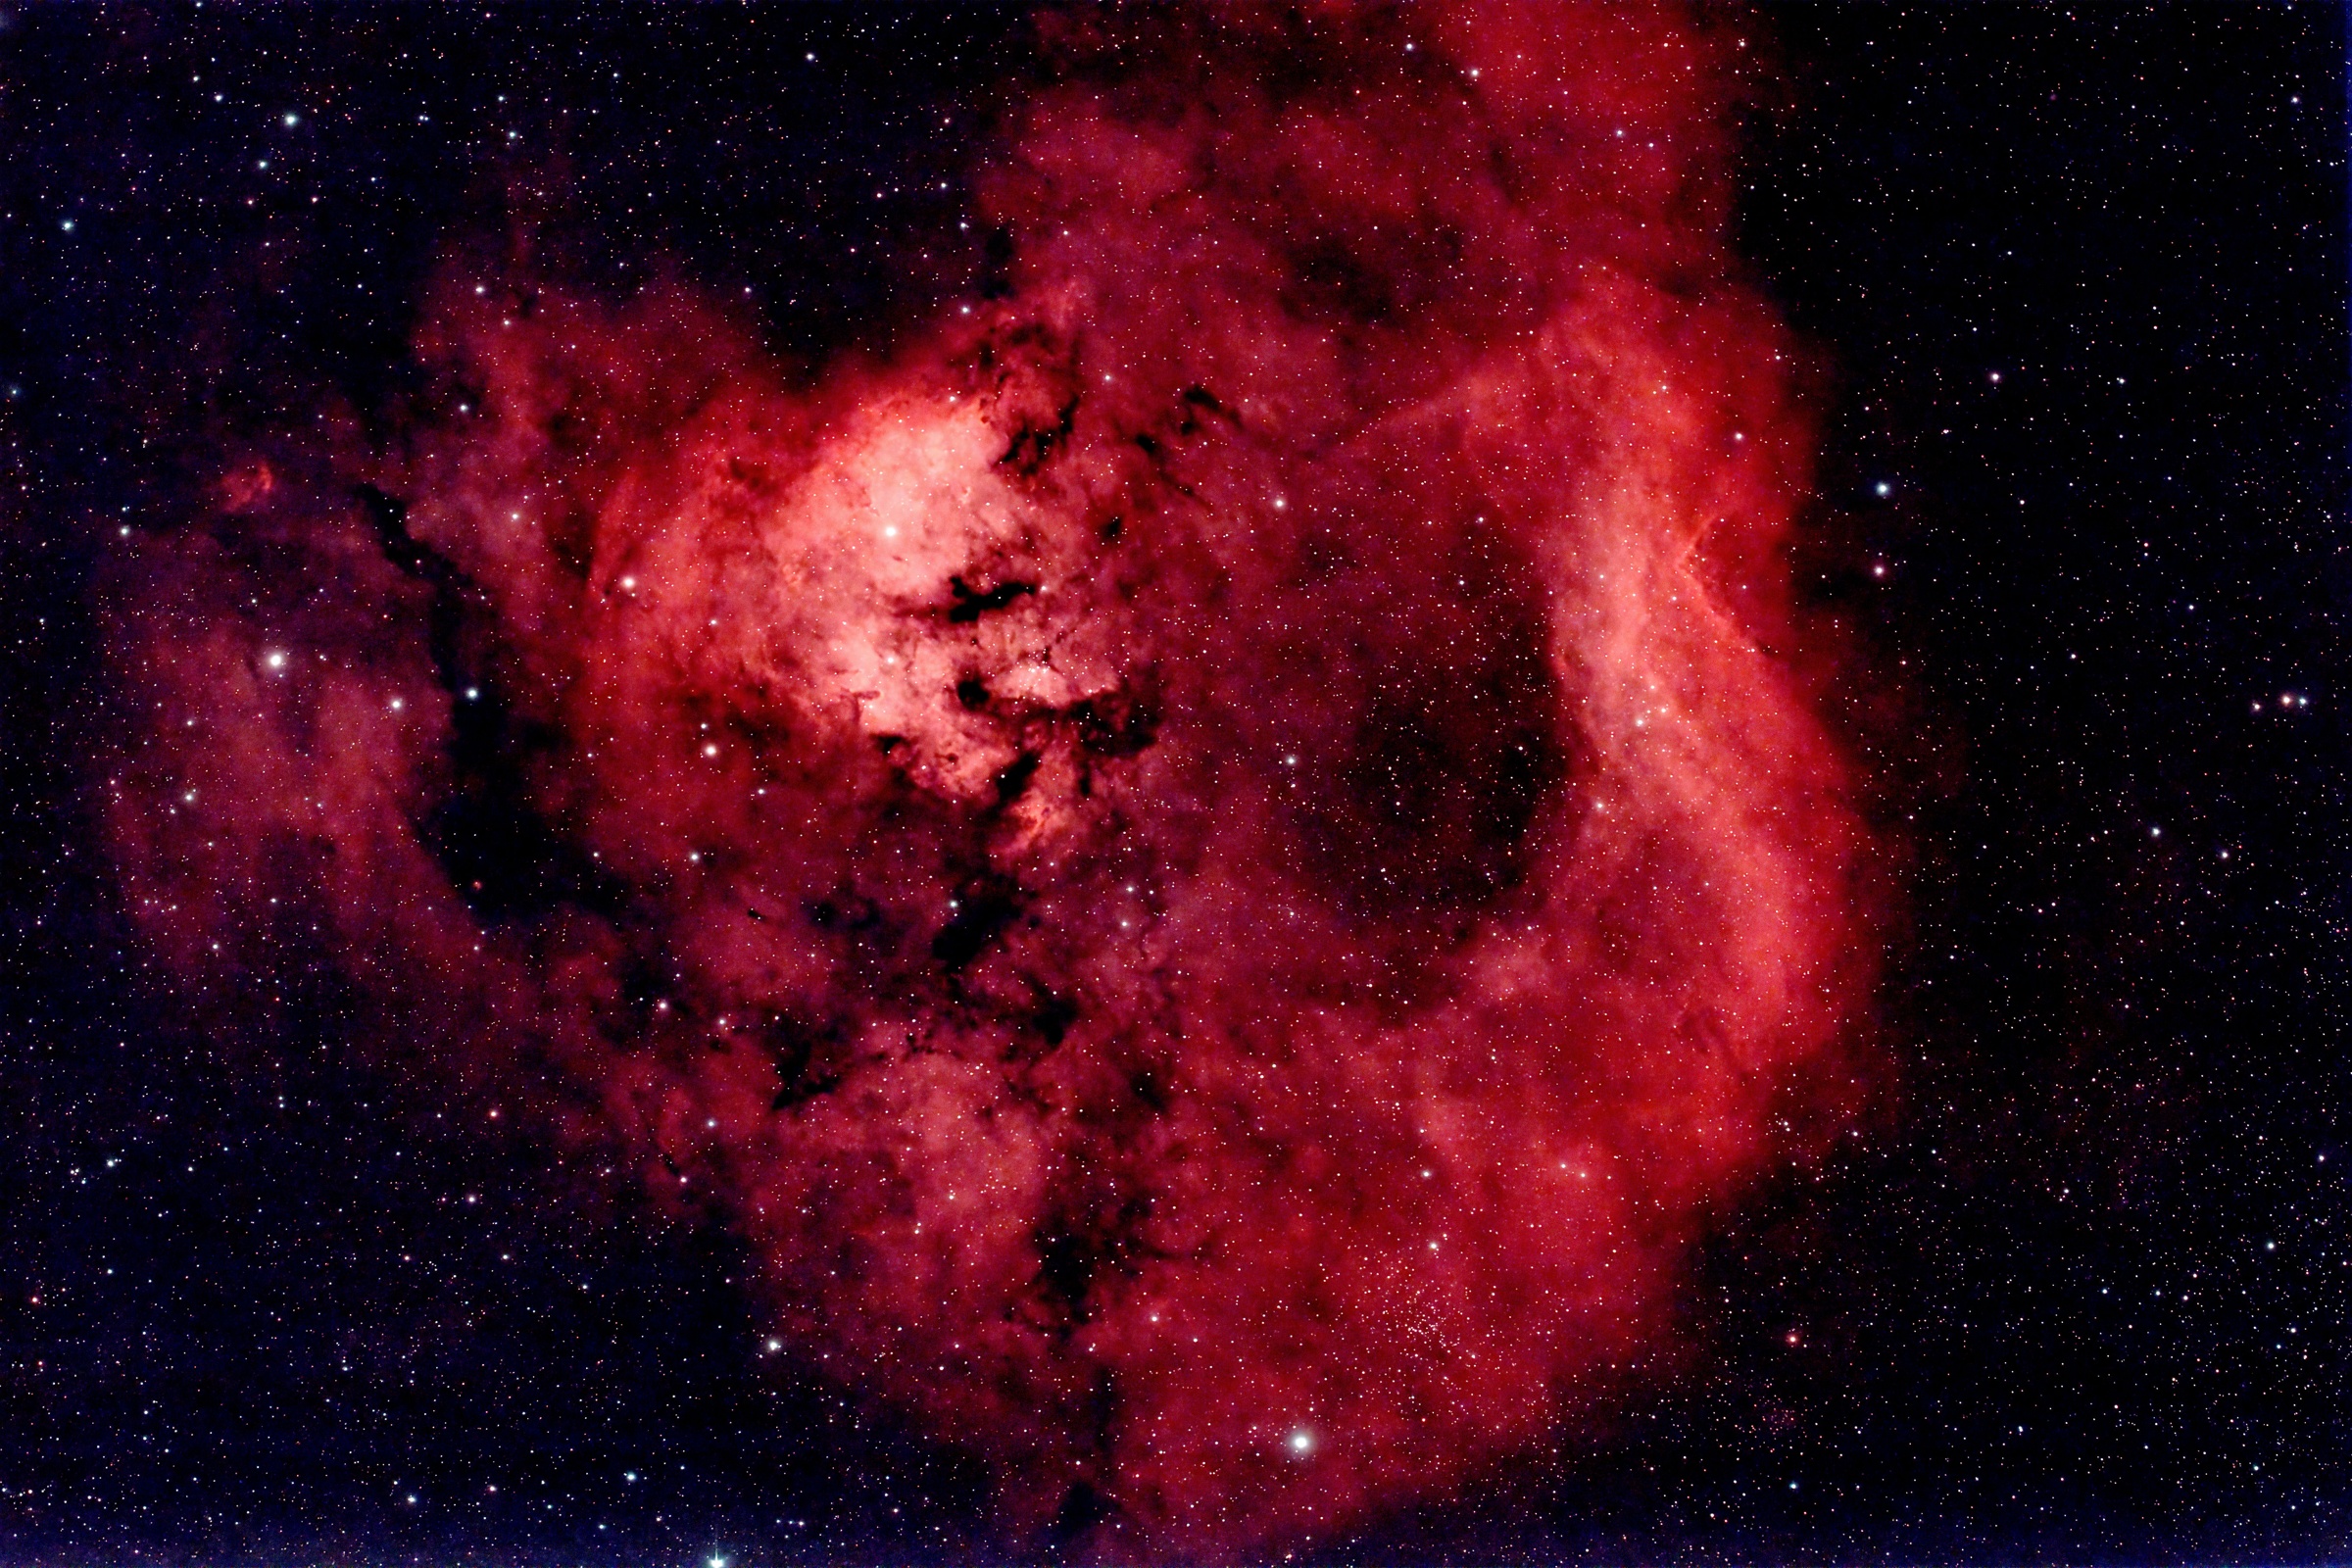 Emission nebula in Cepheus